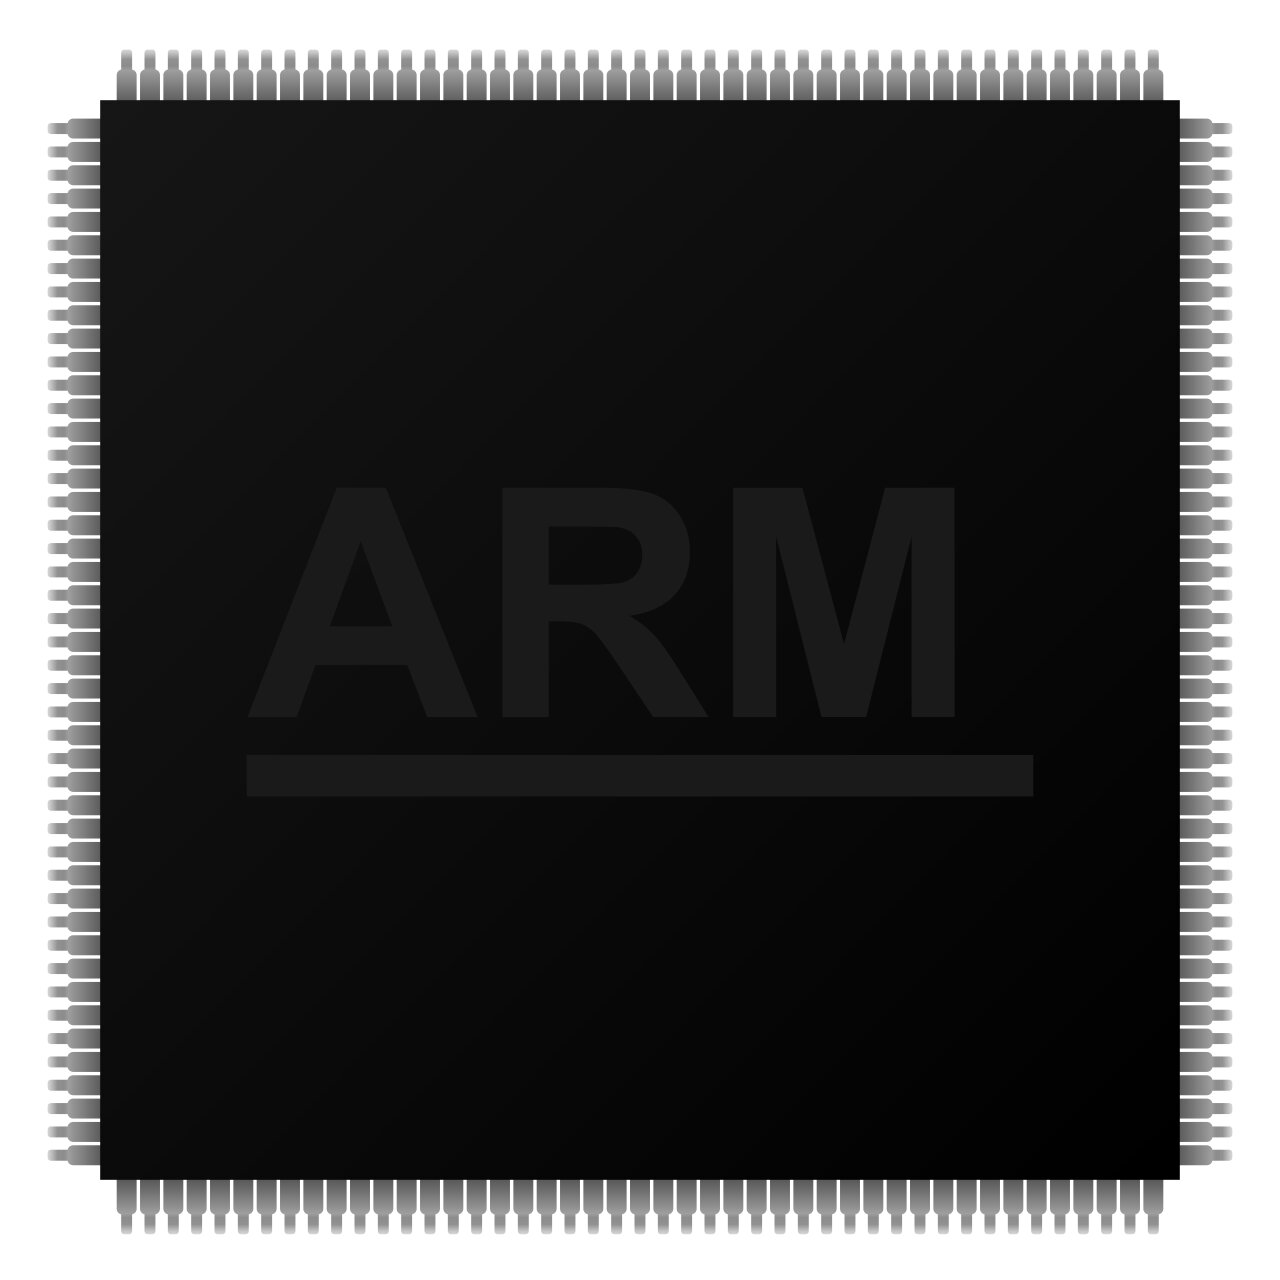 ARM_CPU